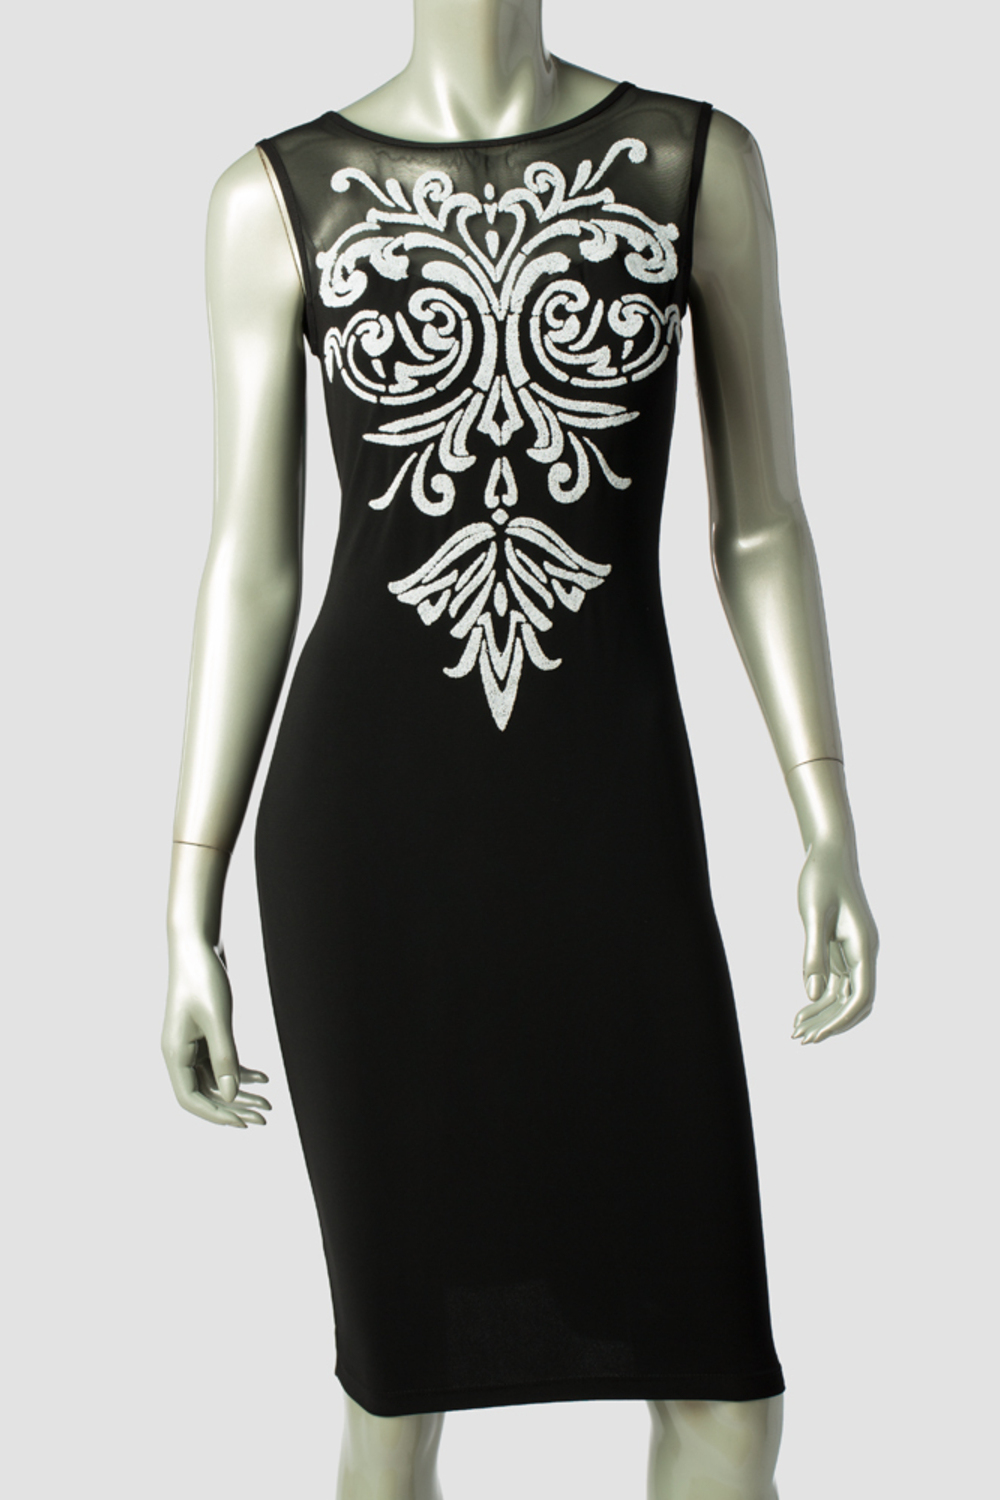 Joseph Ribkoff dress style 144023. Black/white